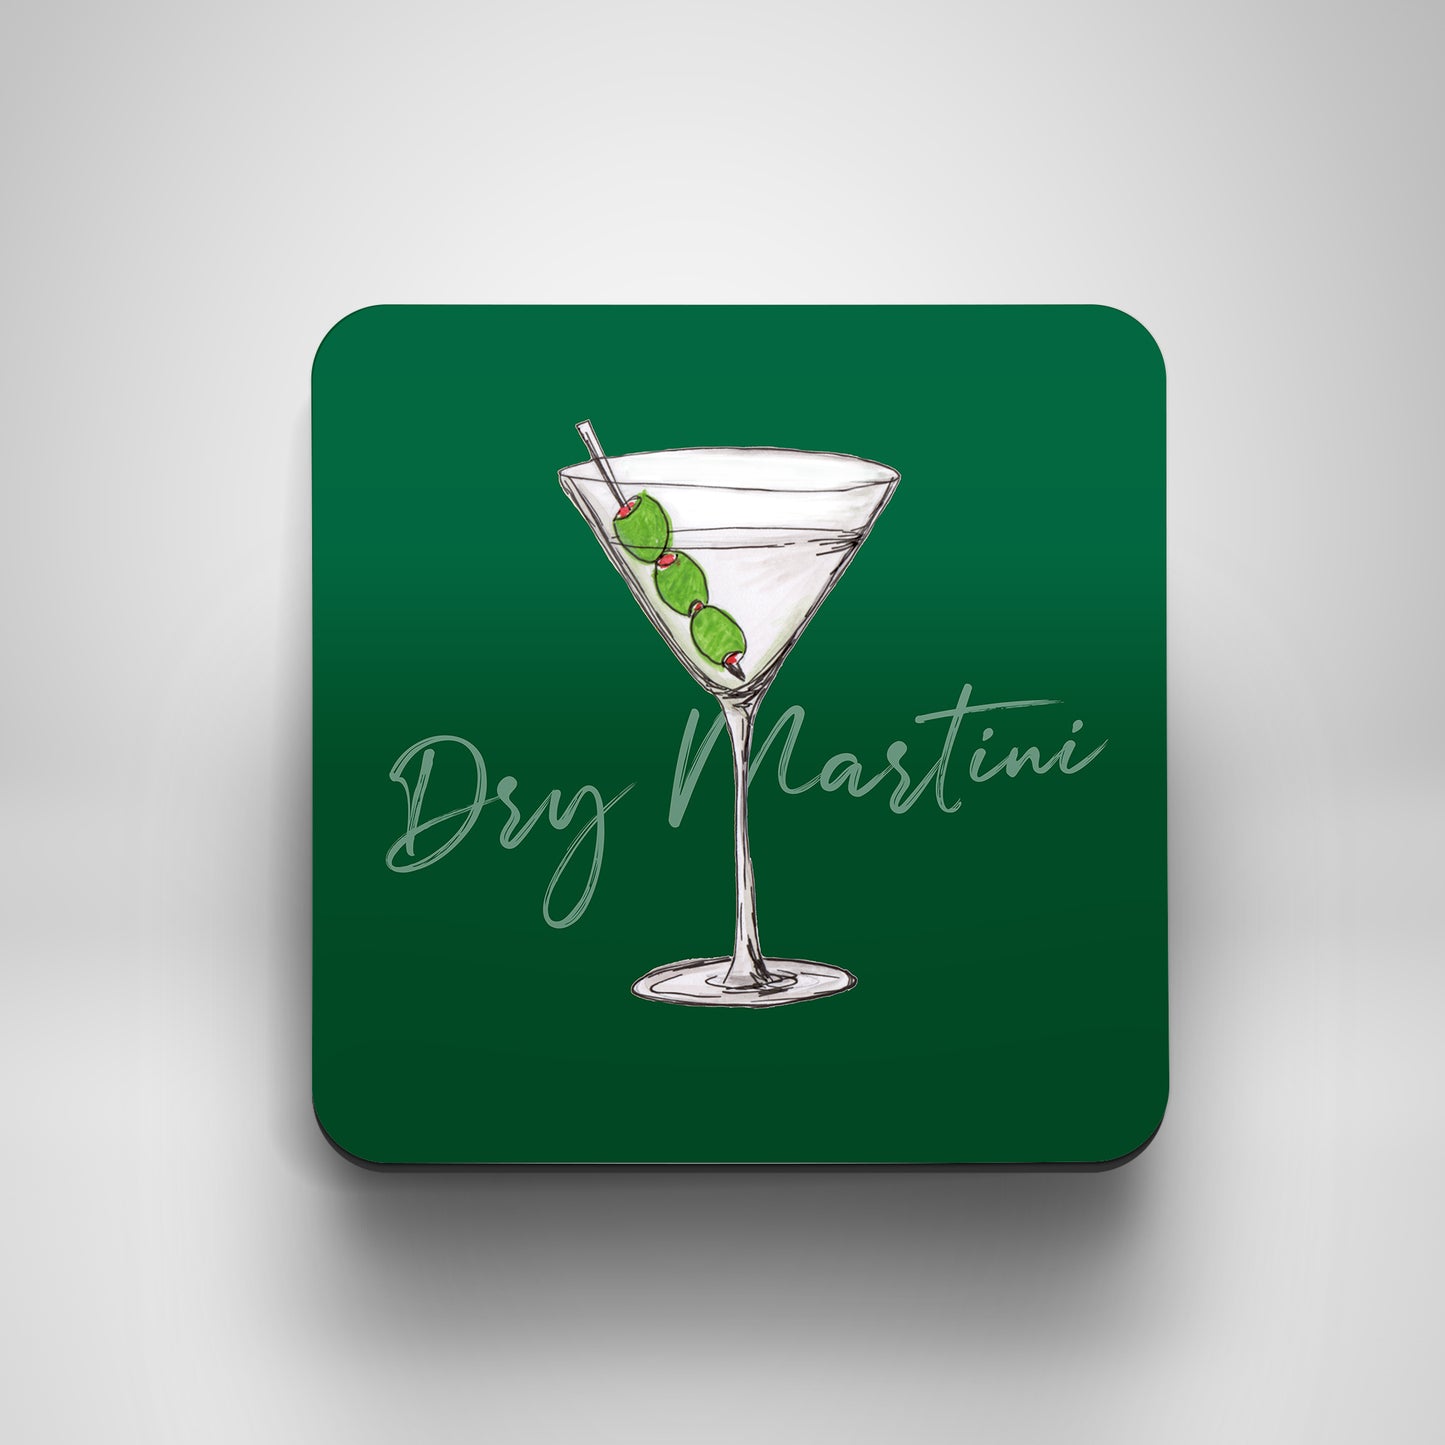 Dry Martini illustrated drinks coaster